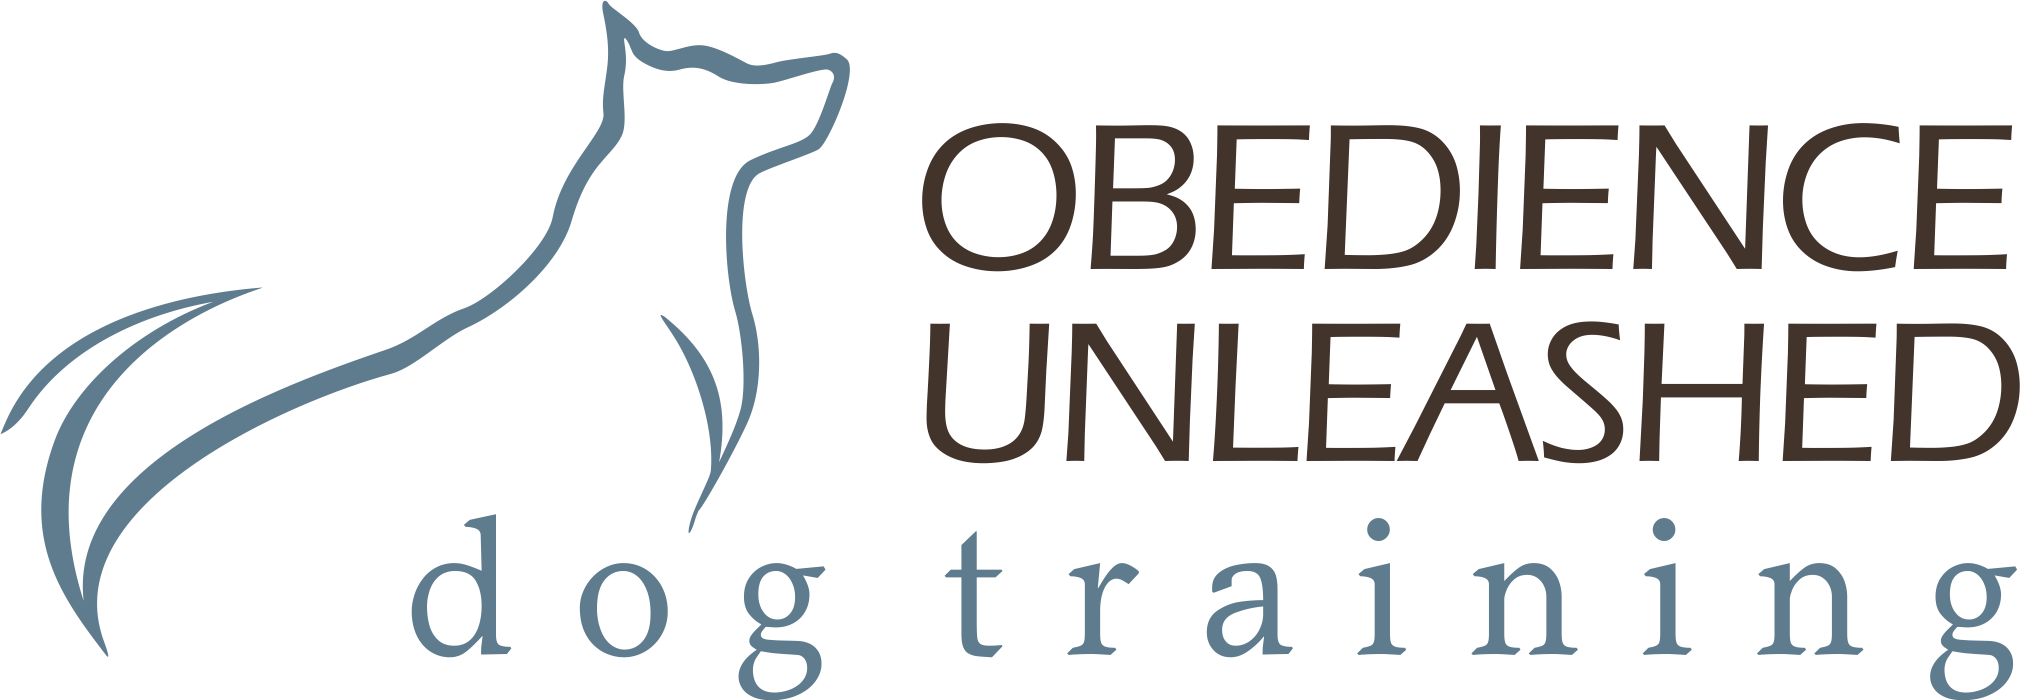 Obedience Unleashed Dog Training Inc.